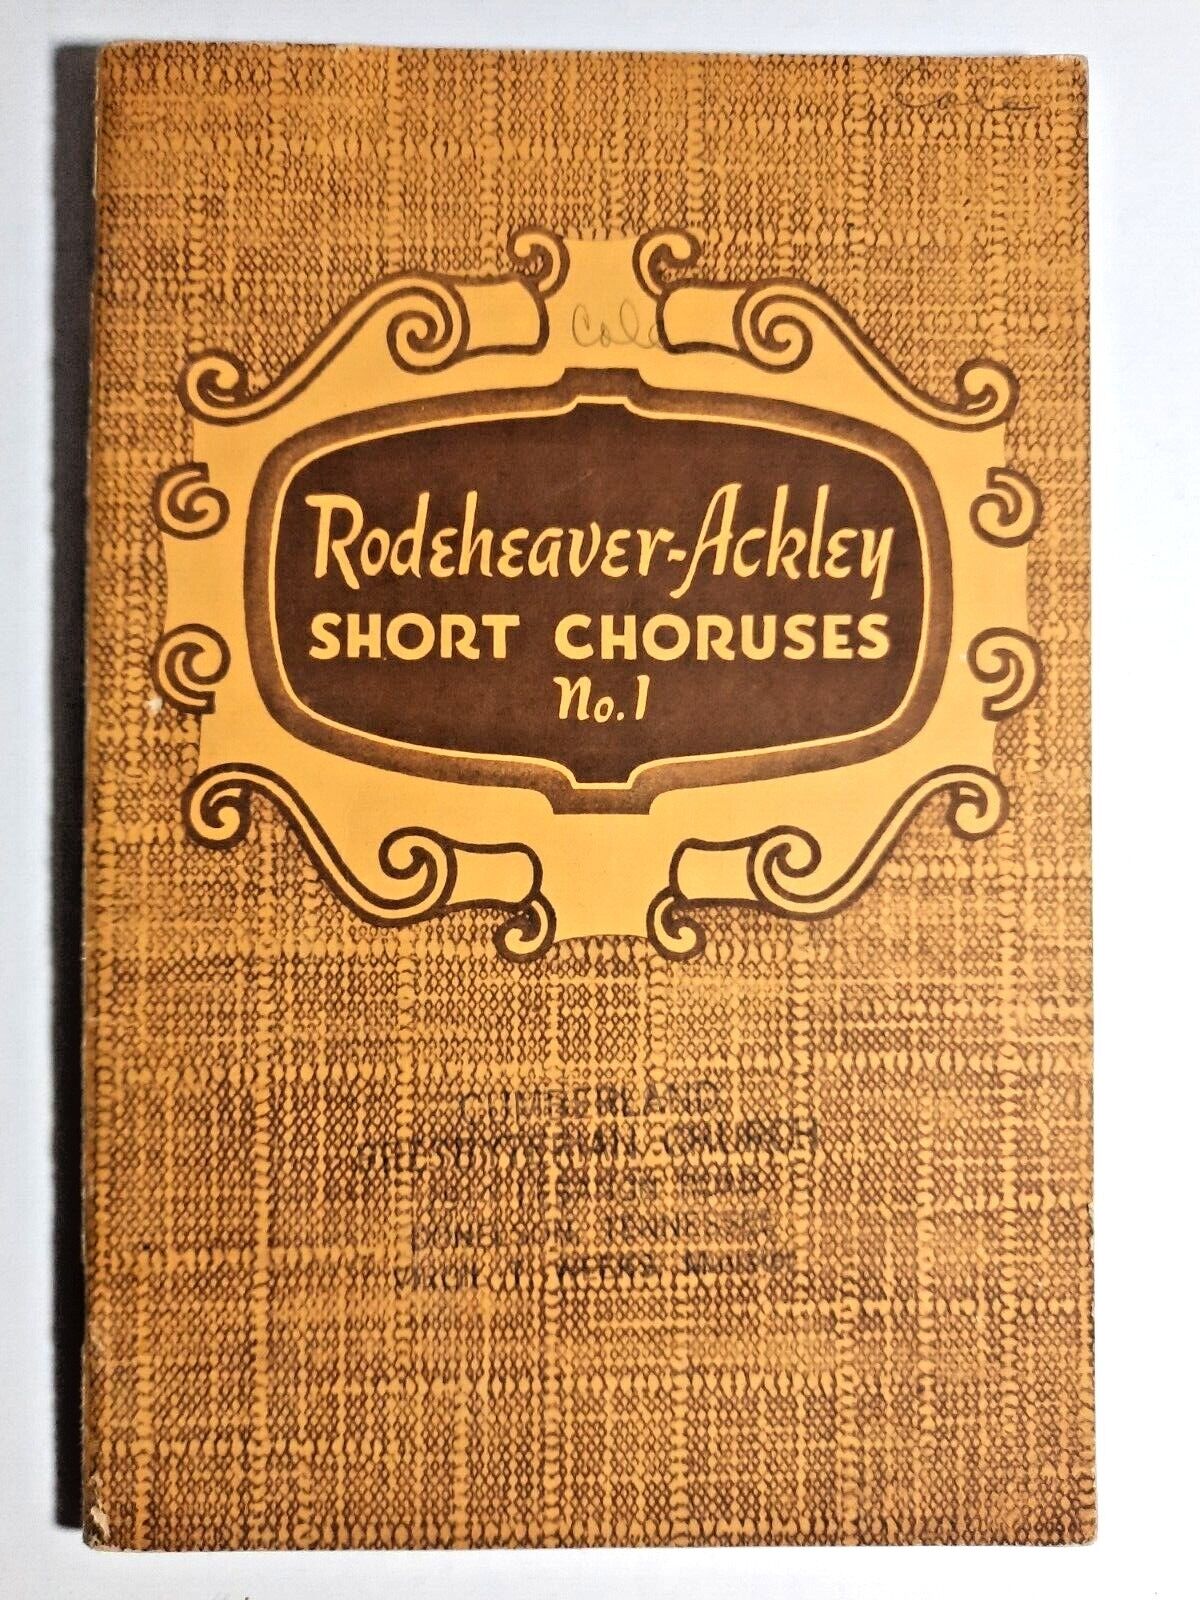 Rodeheaver-Ackley Short Choruses No. 1 vintage Christian religious music book  